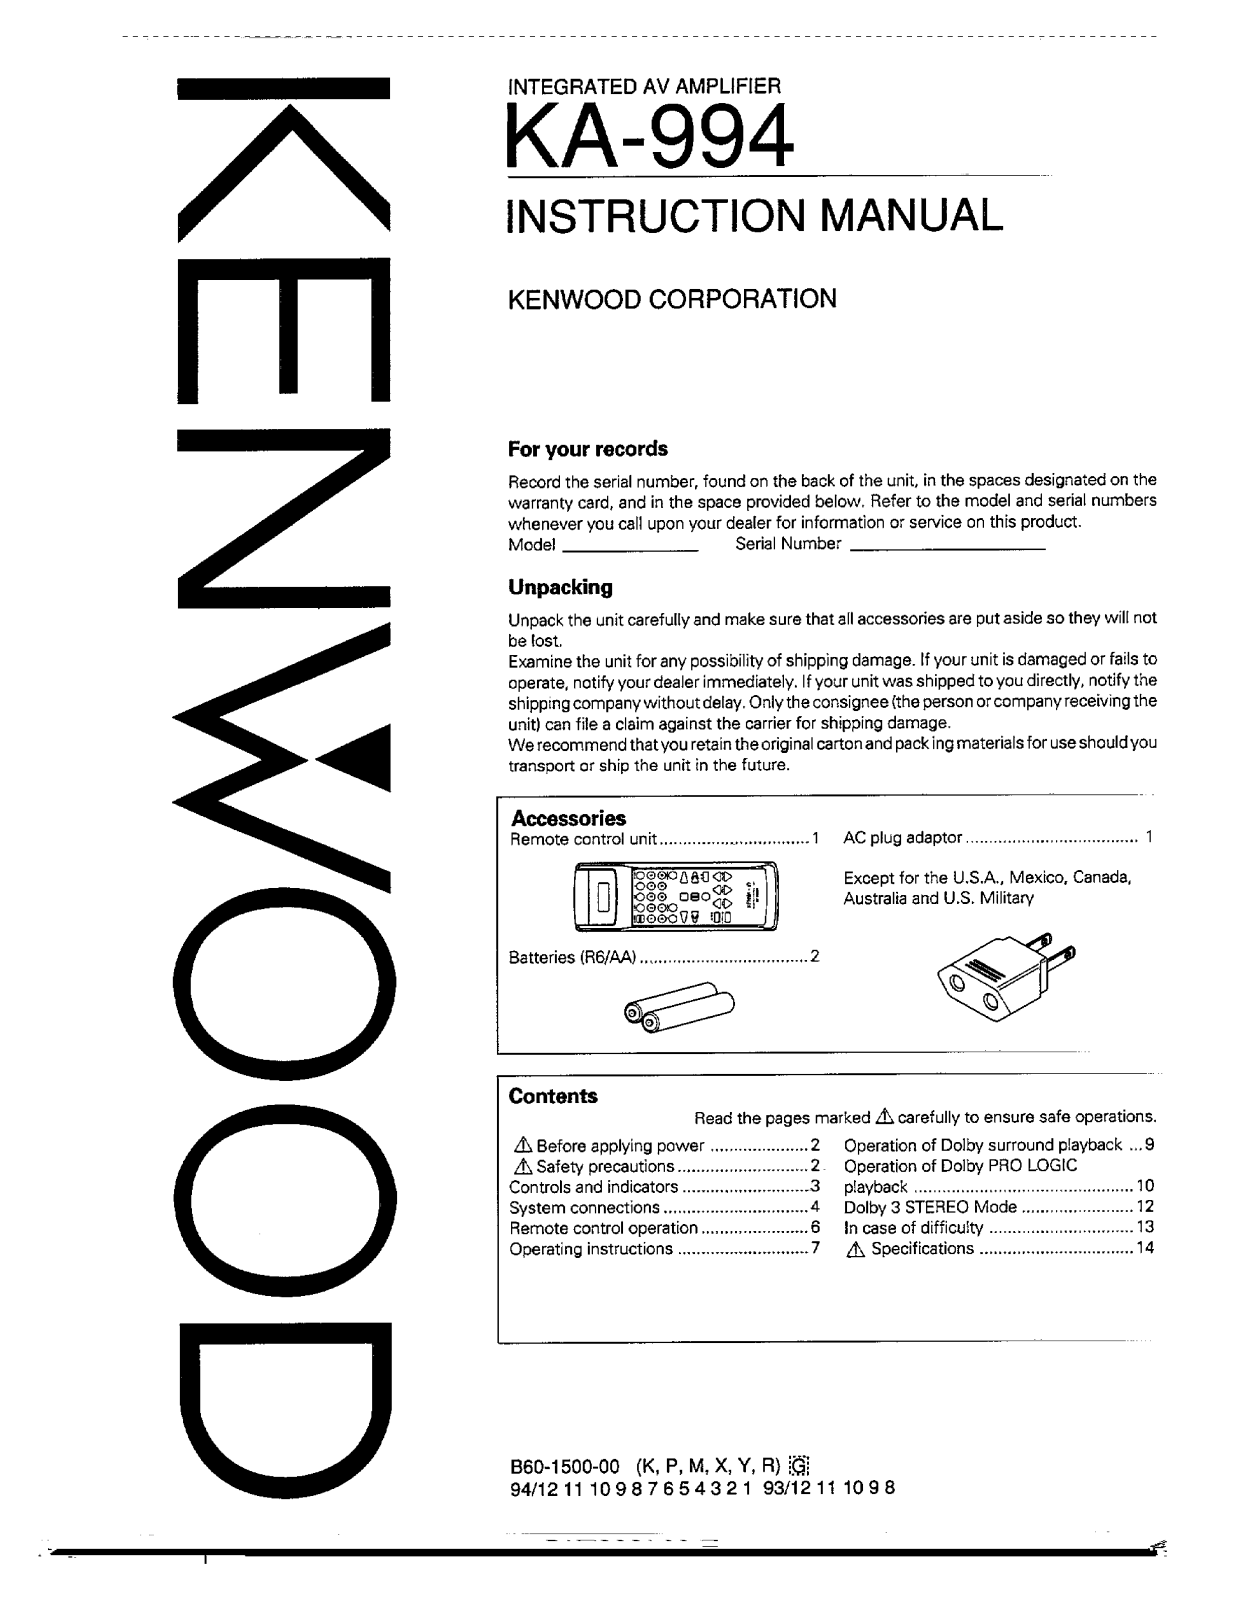 Kenwood KA-994 Owner's Manual